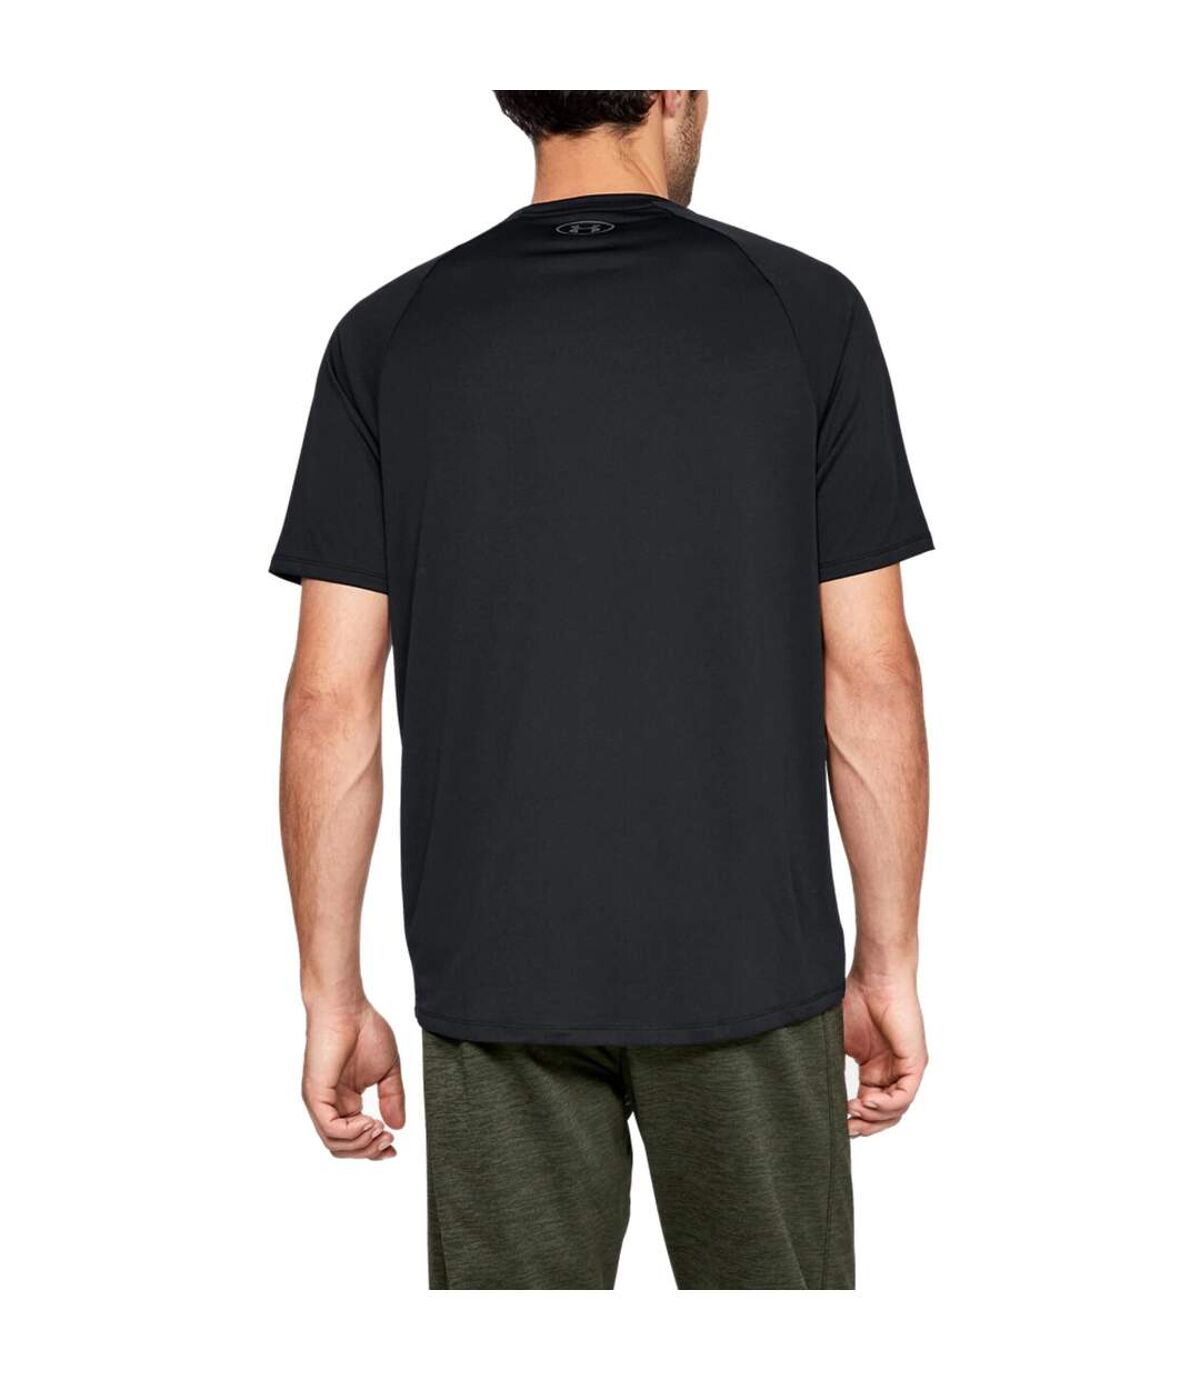 Under Armour Mens Tech T-Shirt (Black) - UTRW7749